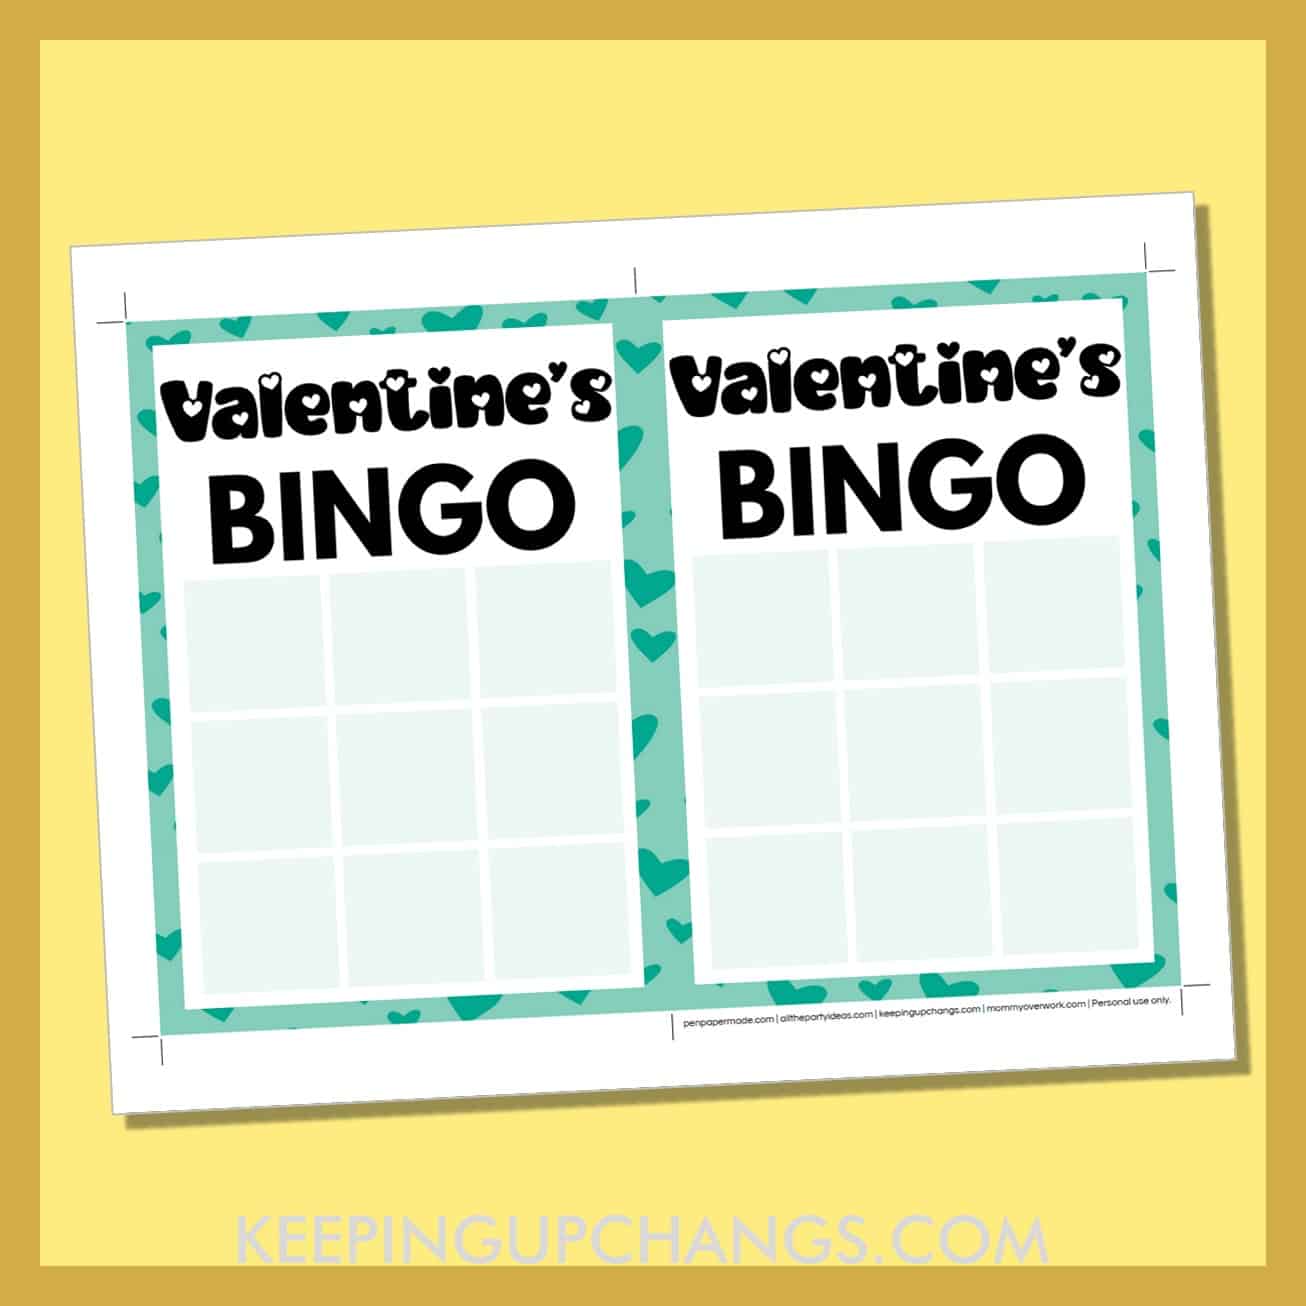 free valentine's day bingo 3x3 grid game board blank template.